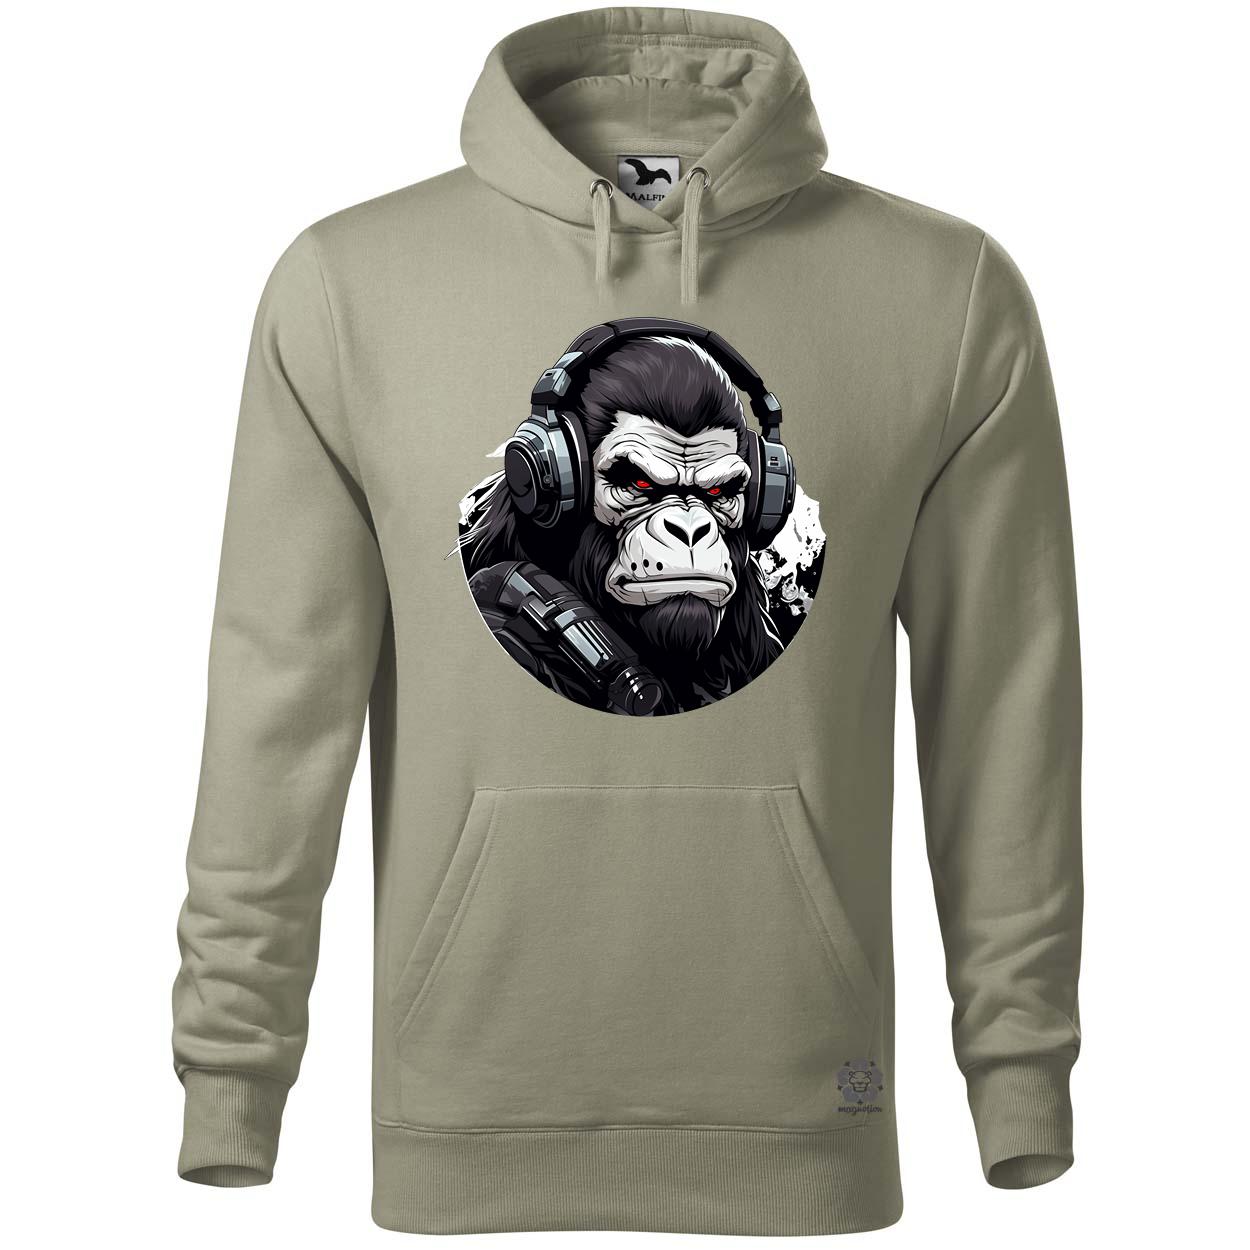 Cyberpunk gorilla v3